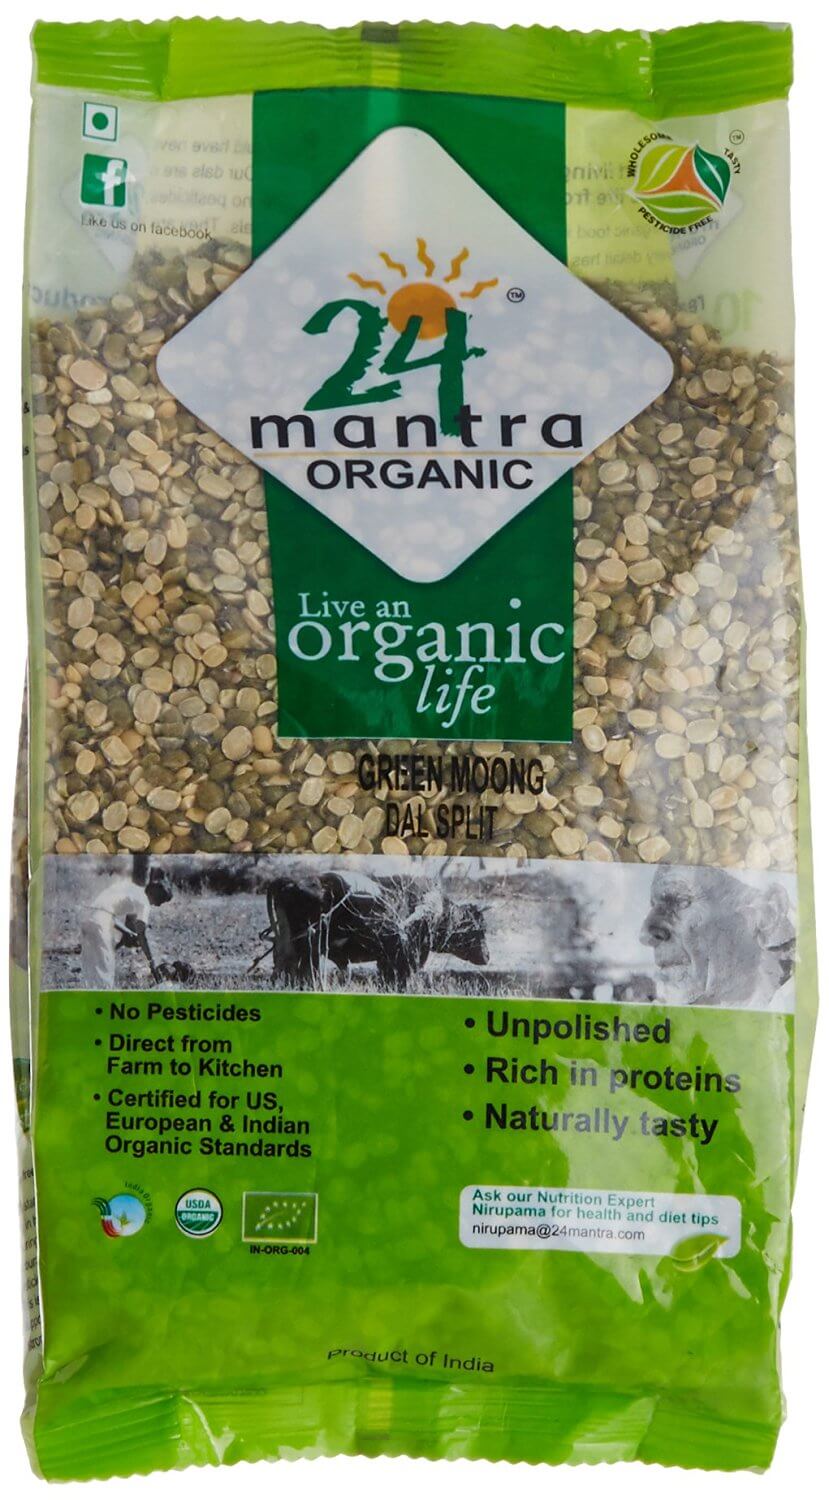 24 Mantra Organic Green Moong Dal Split, 500g